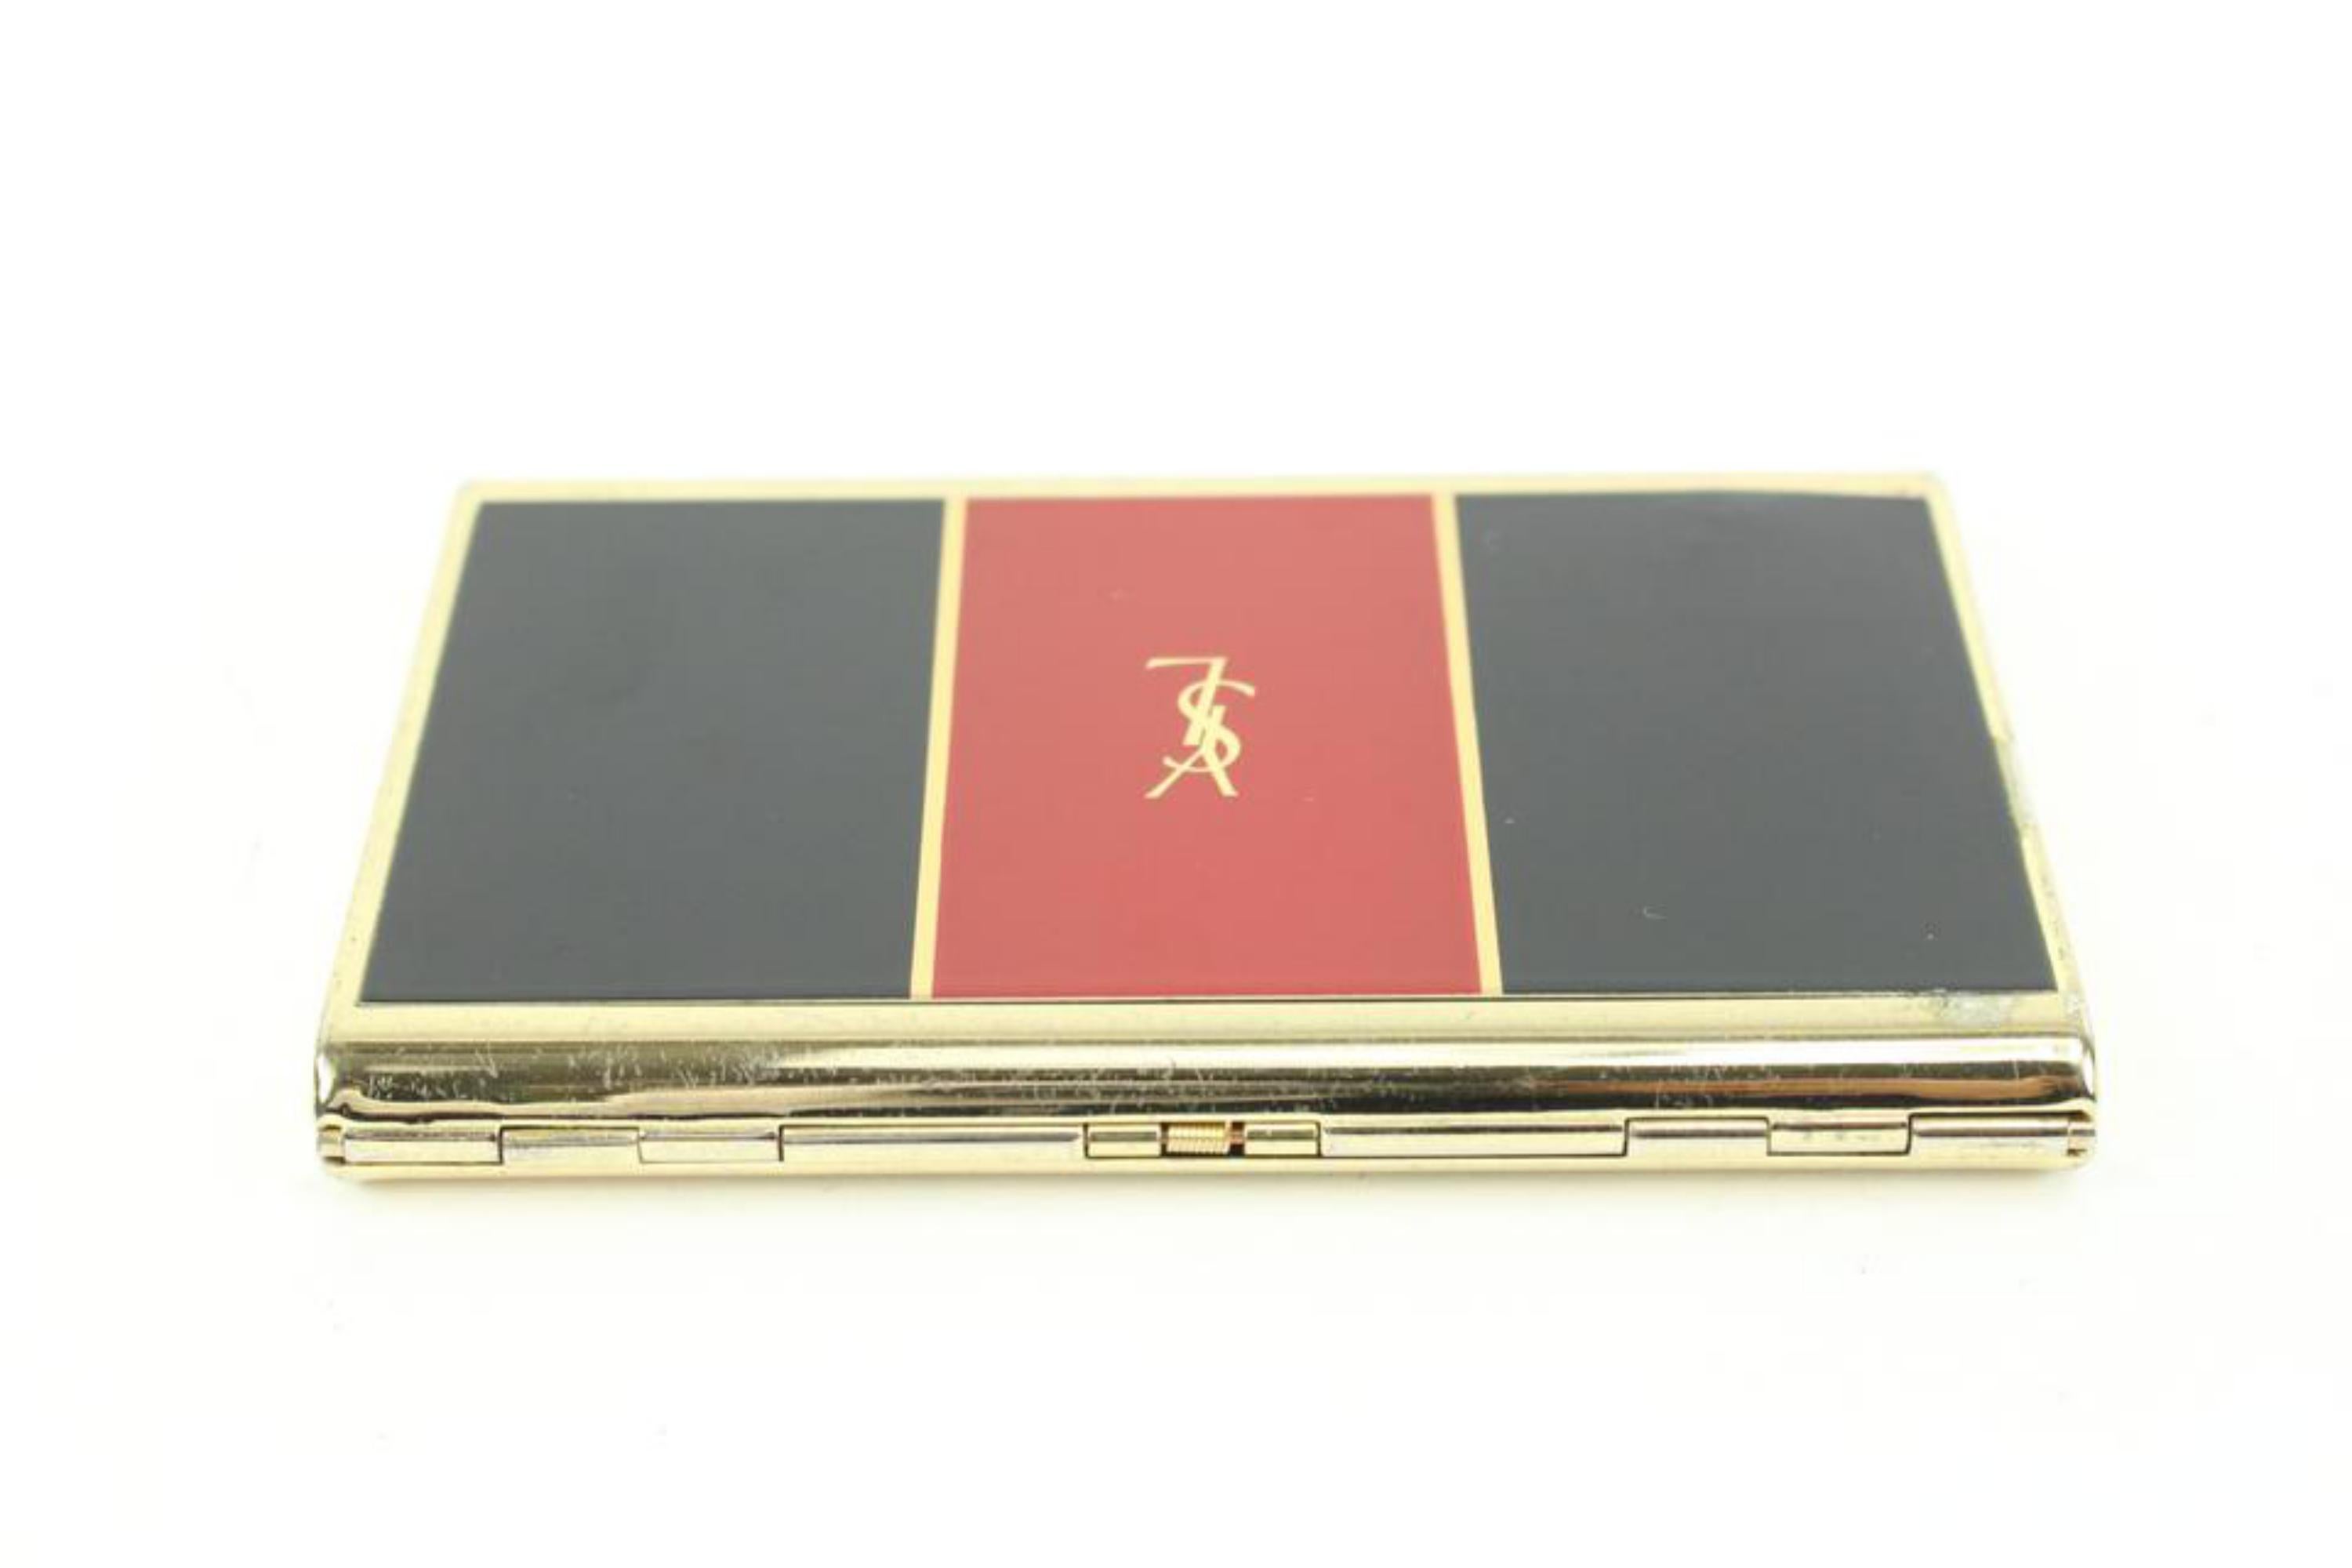 Saint Laurent Red x Black x Gold YSL Monogramme Card Case Cigarette Box  21ysl42 1